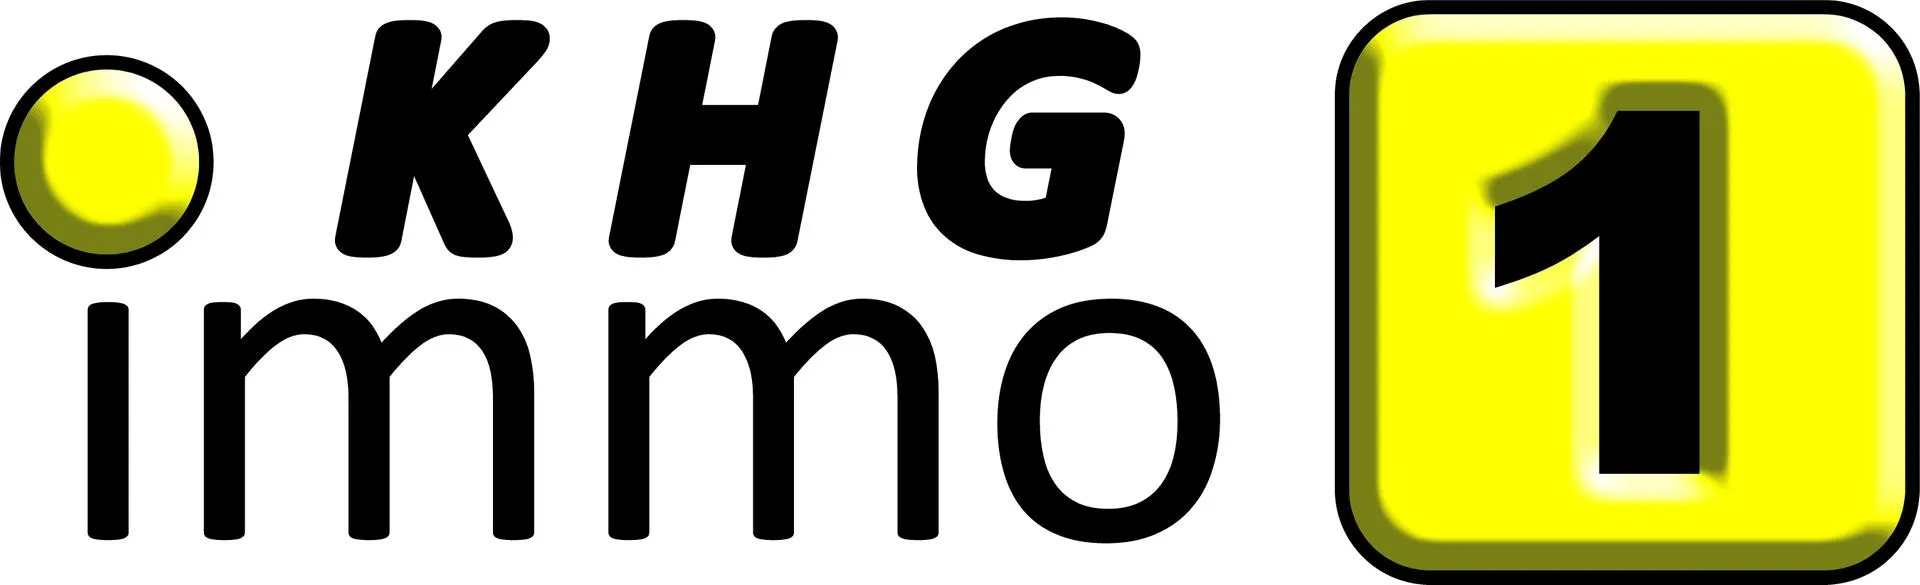 Makler KHG immoeins GmbH & Co KG logo